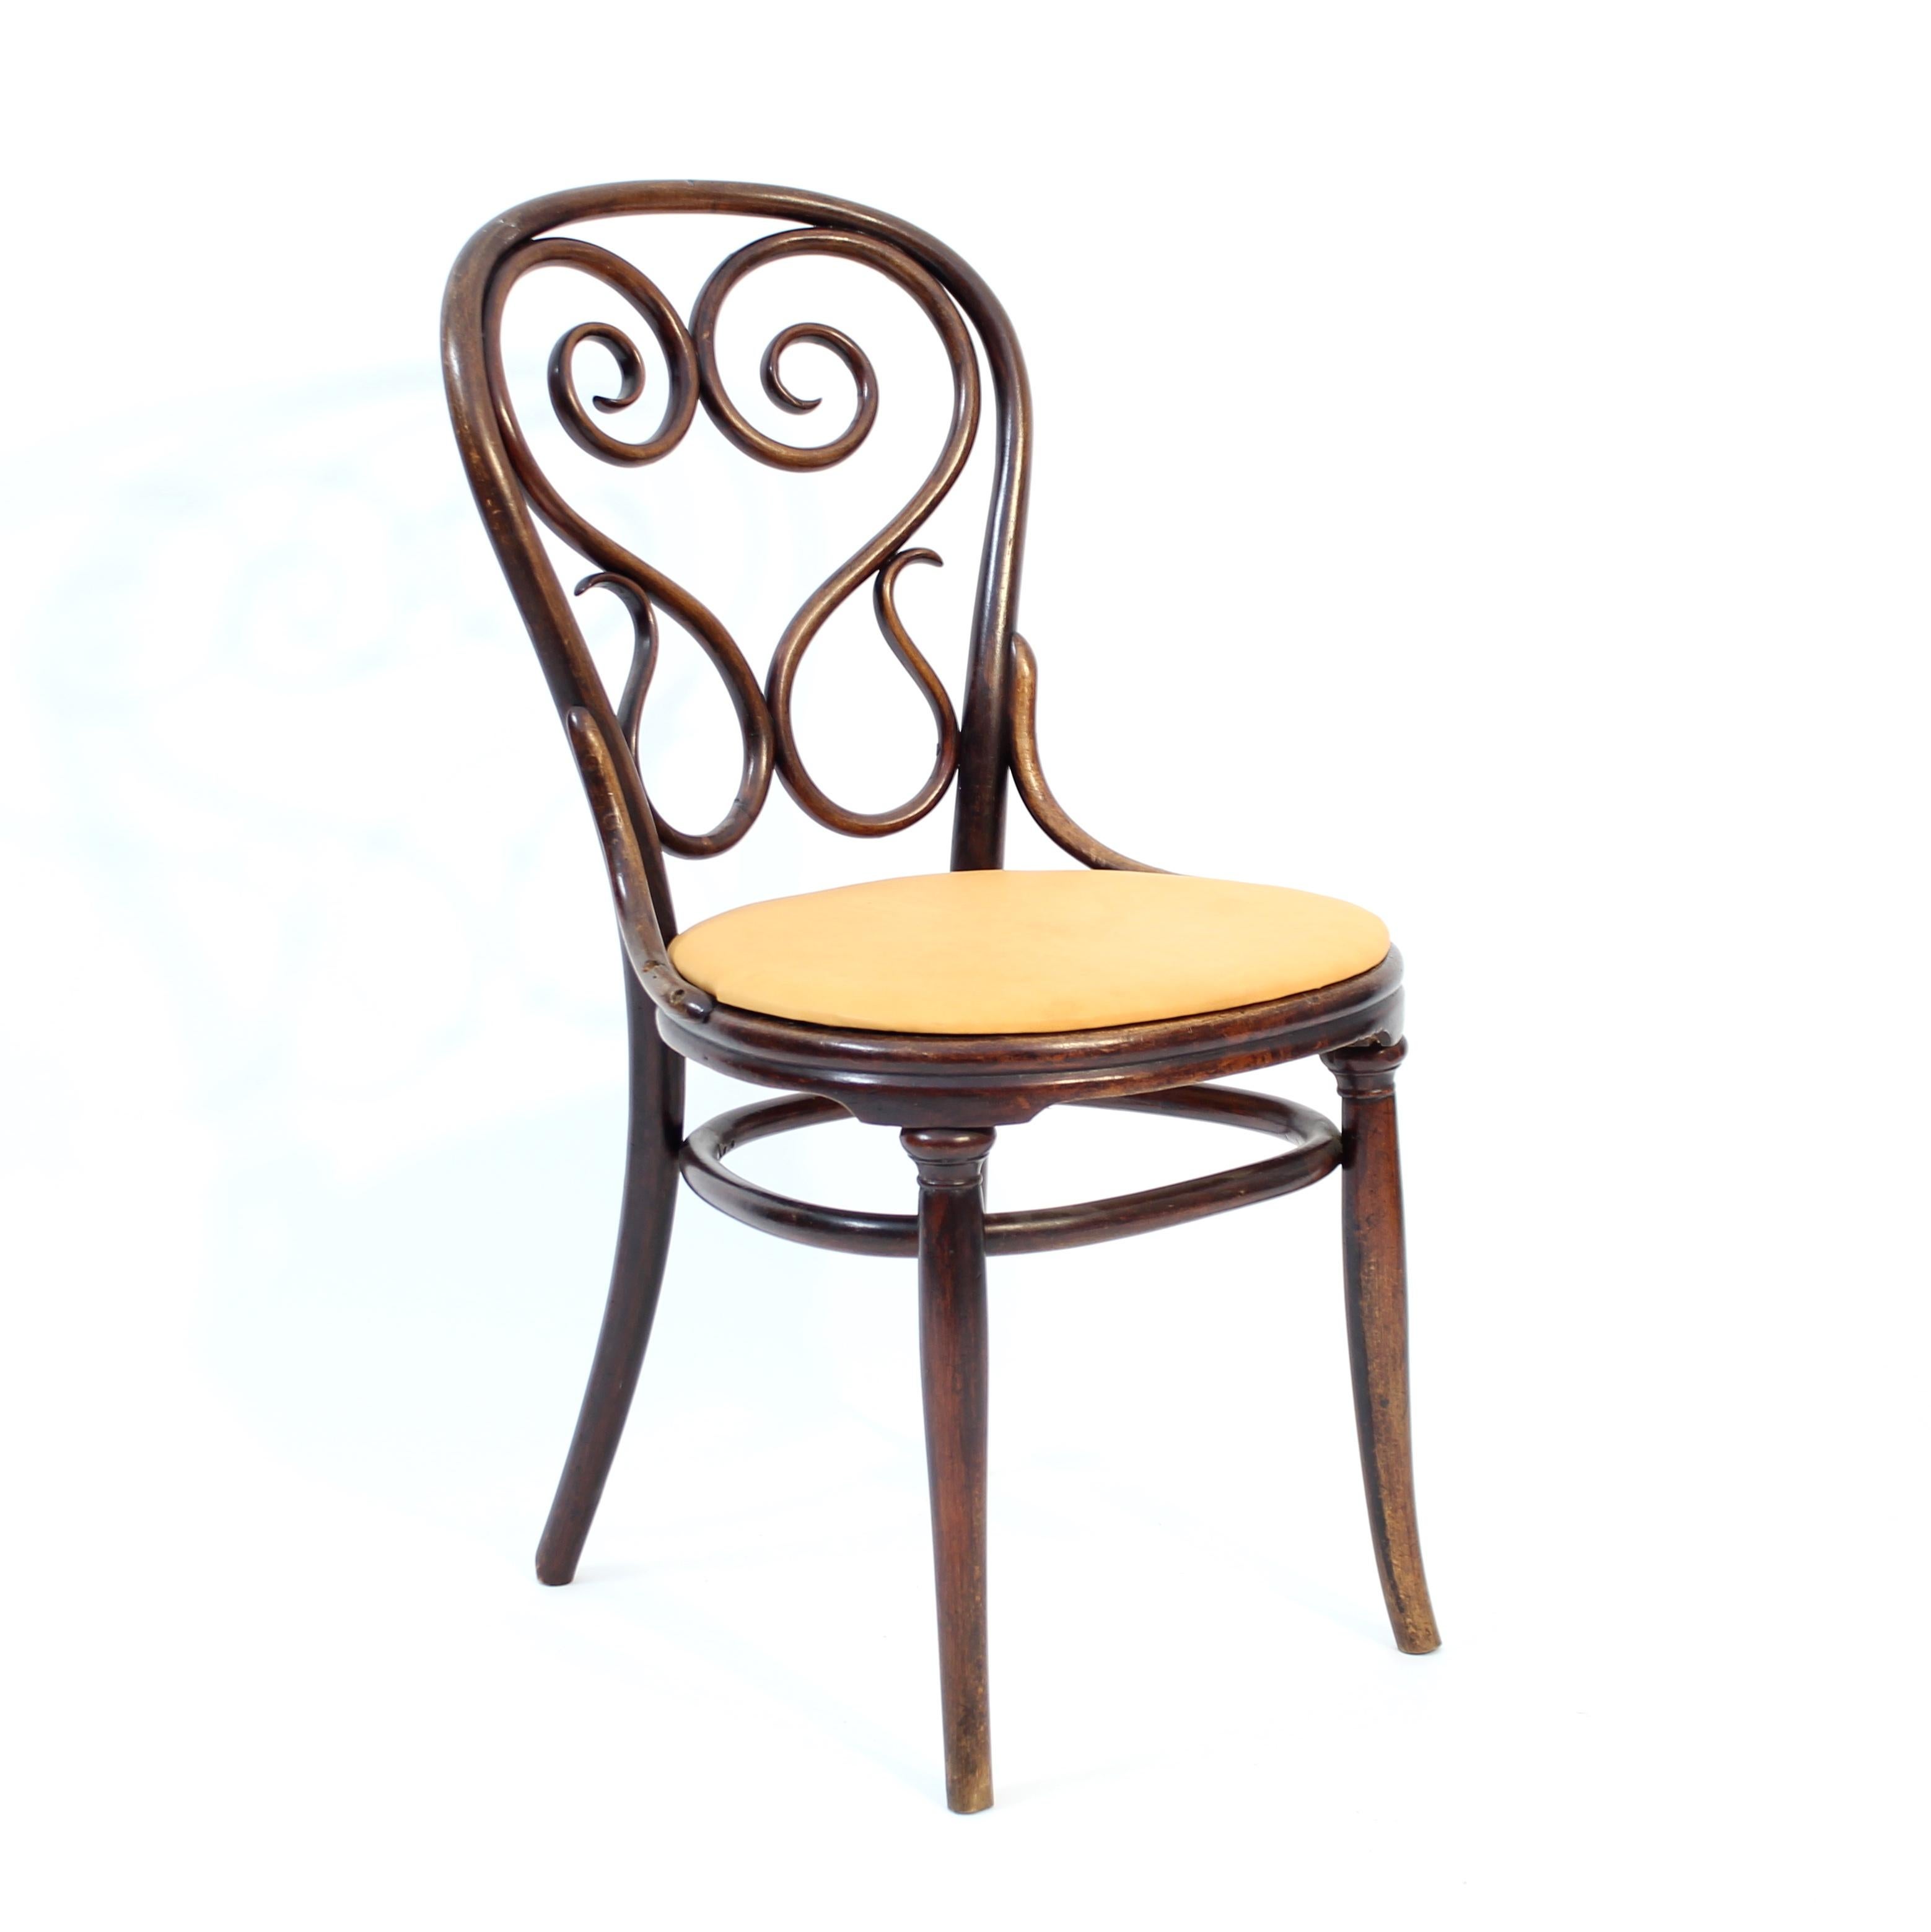 19th Century Michael Thonet, rare set of 4 Café Daum chairs for Thonet, 1849